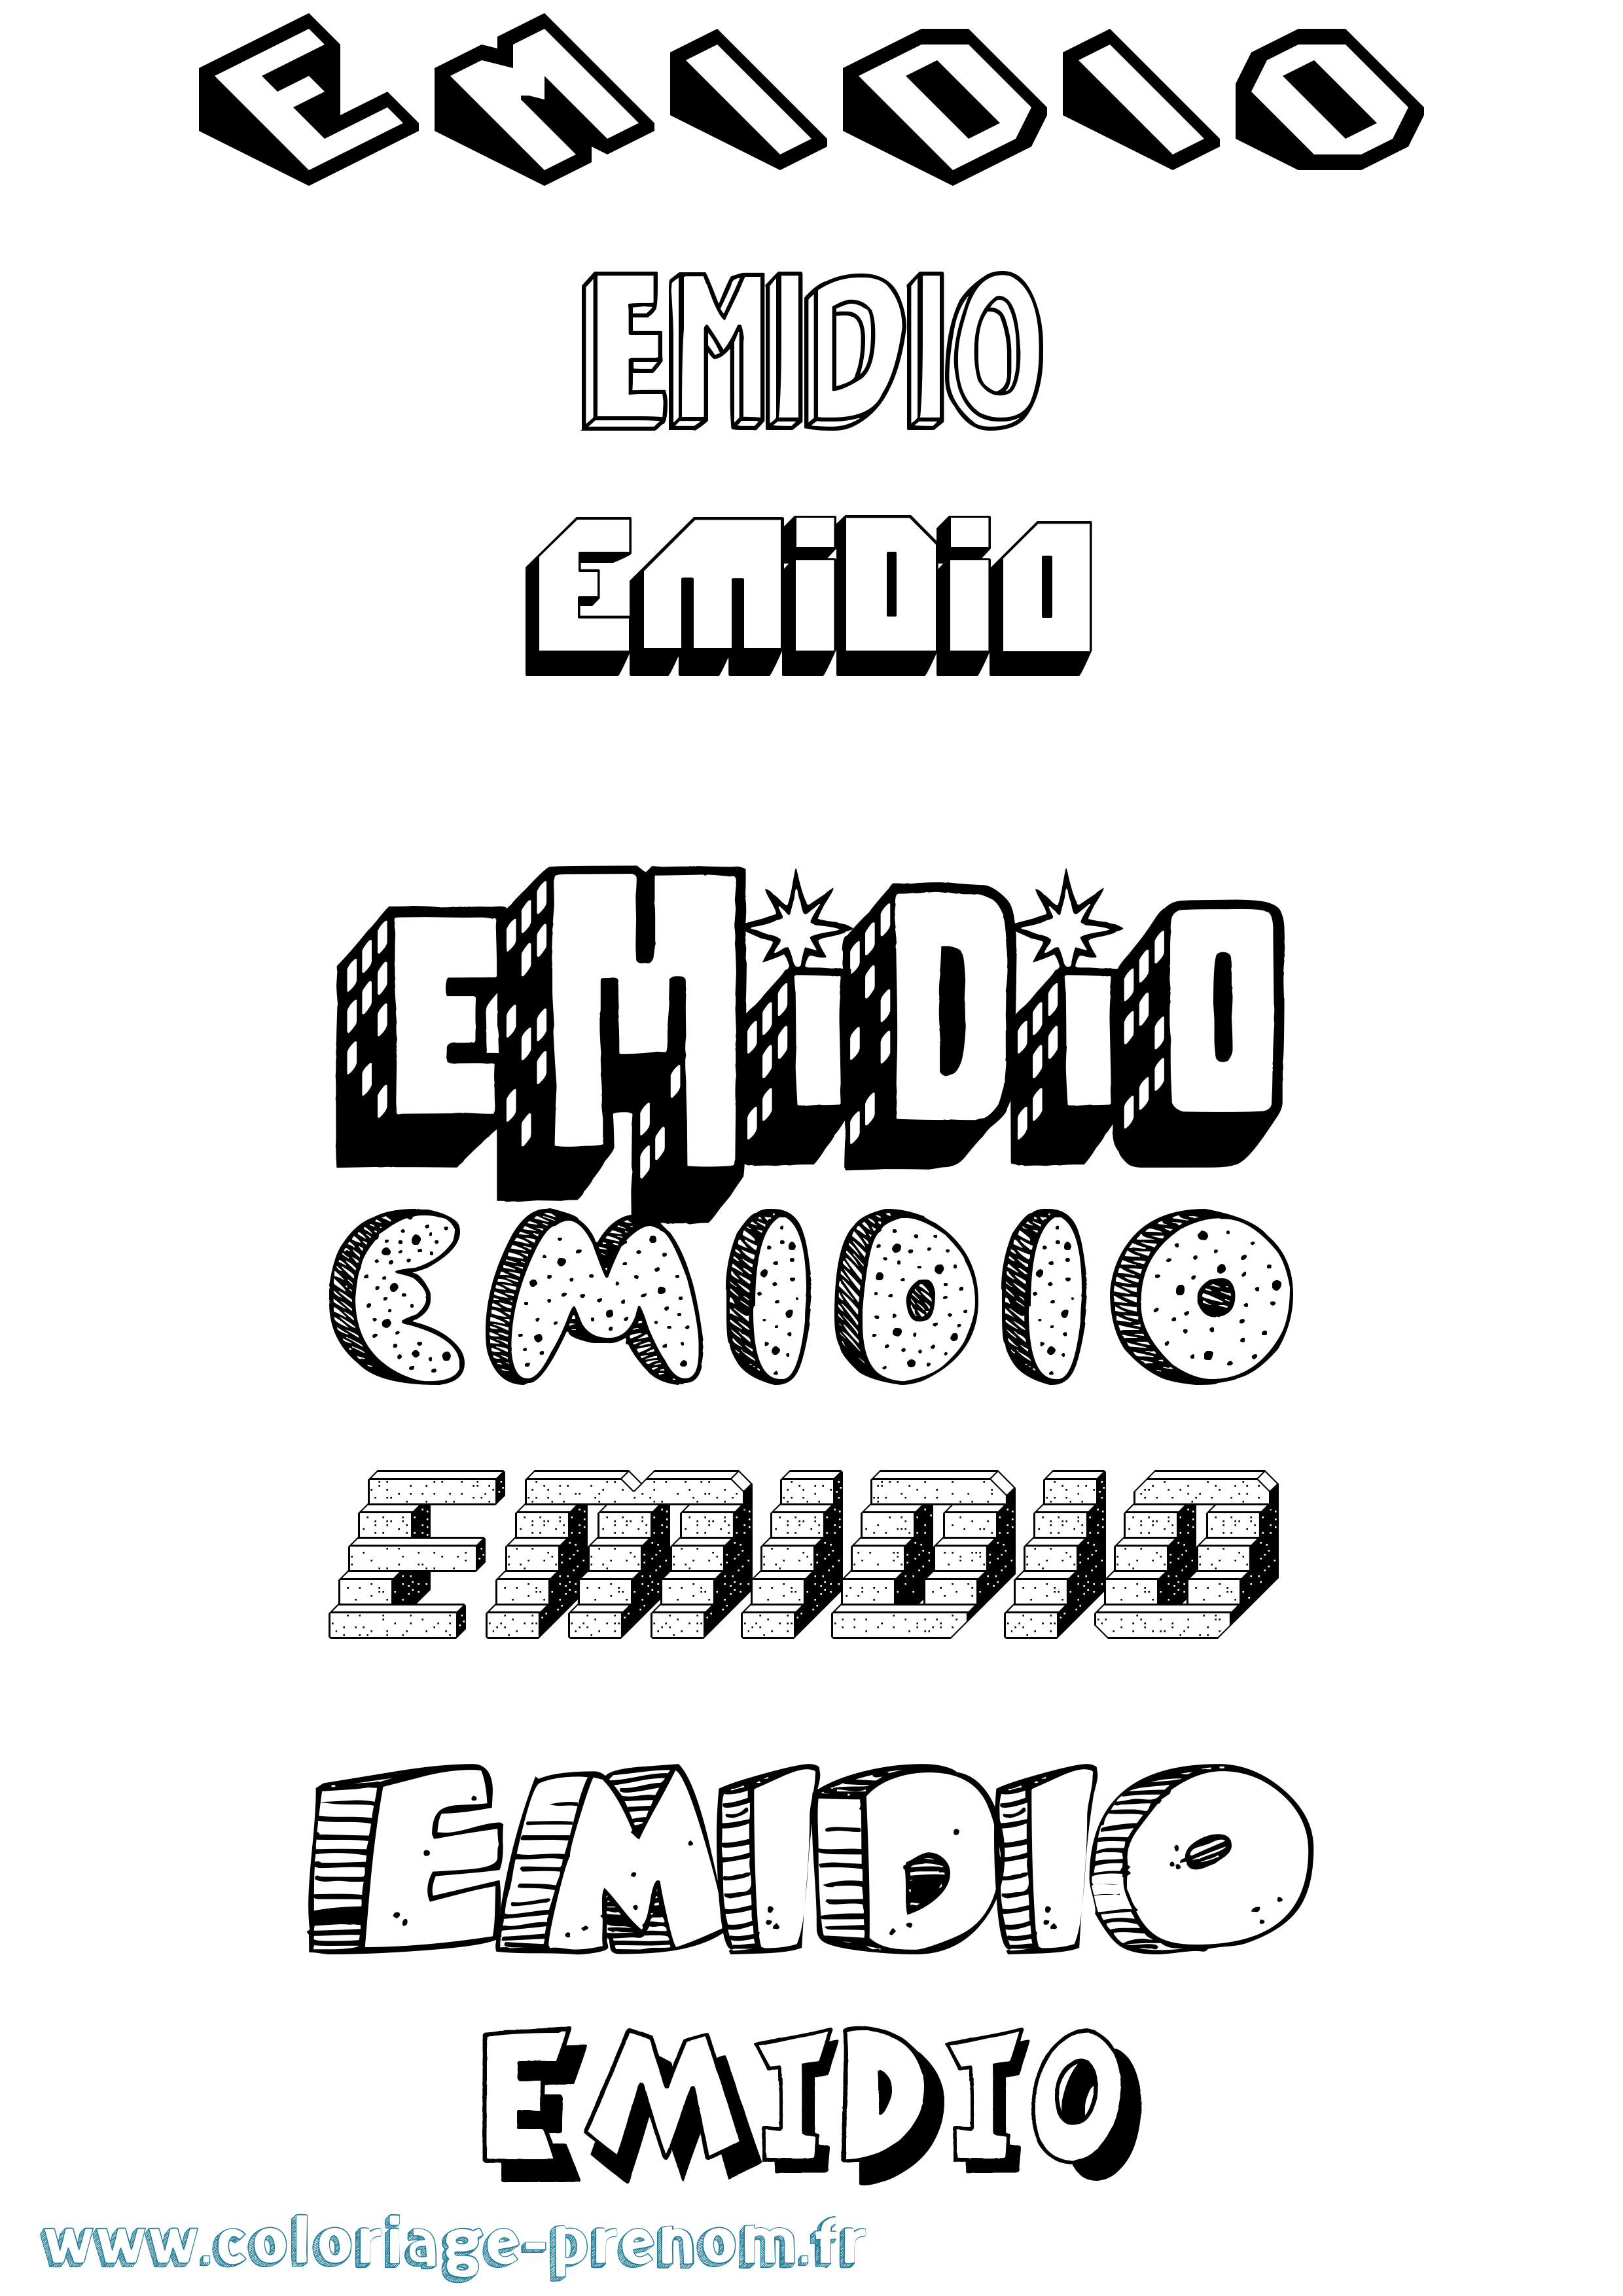 Coloriage prénom Emidio Effet 3D